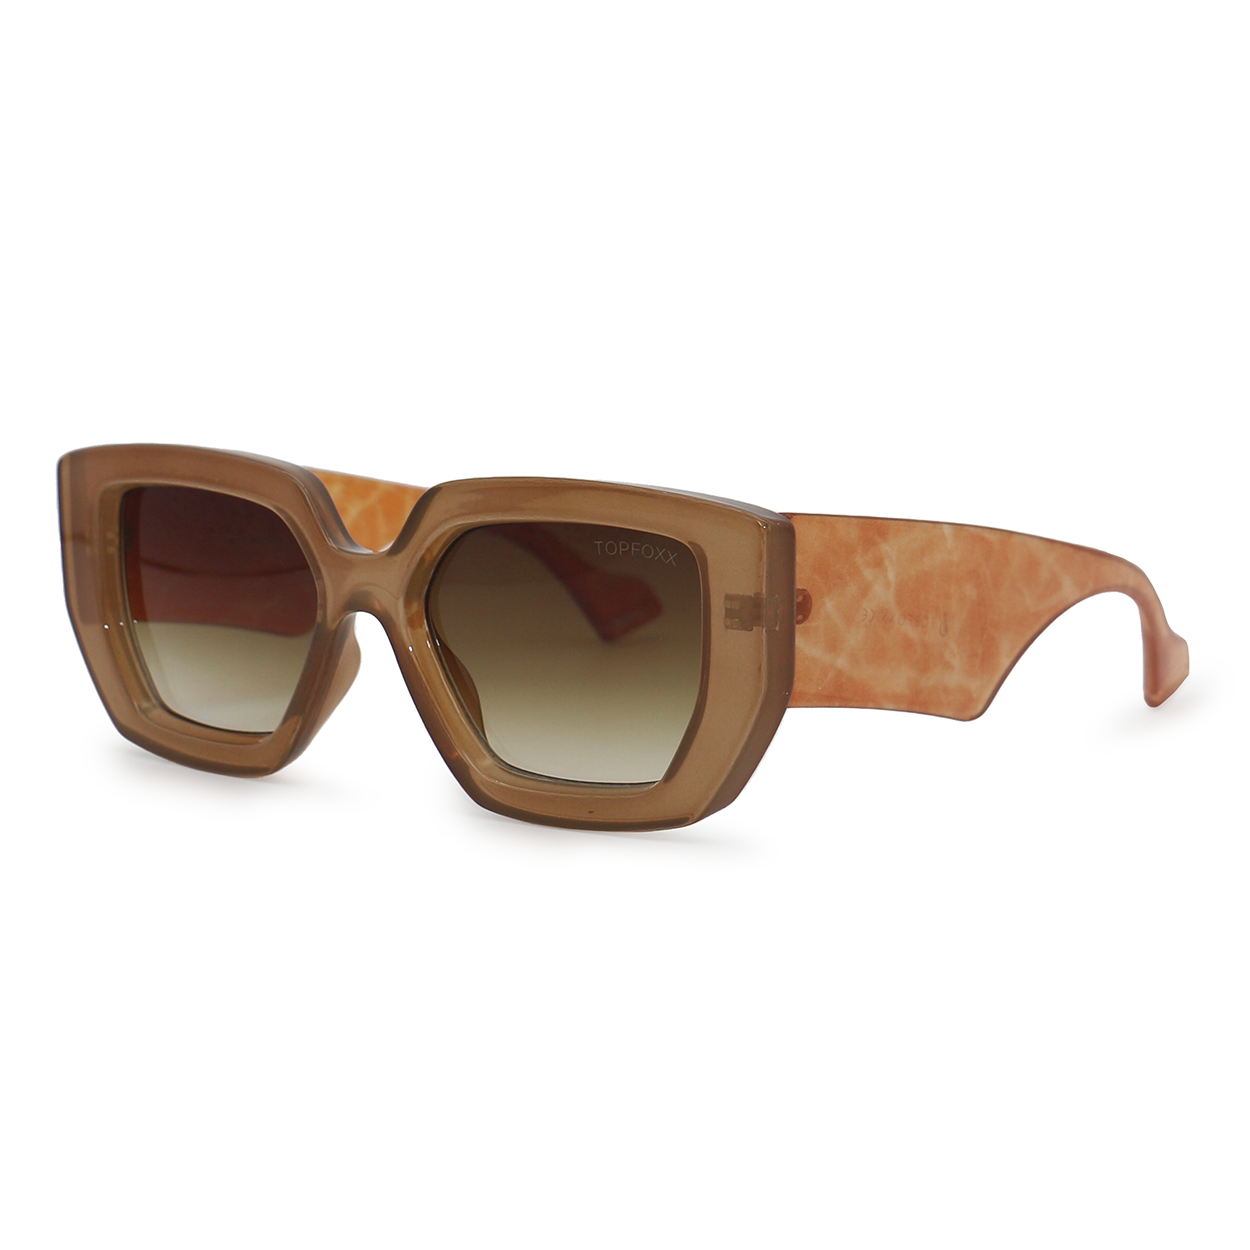 TopFoxx - Incognito Coffee - Oversized Square Sunglasses for Women - Eco Eyeware - Big Arms Sunglasses